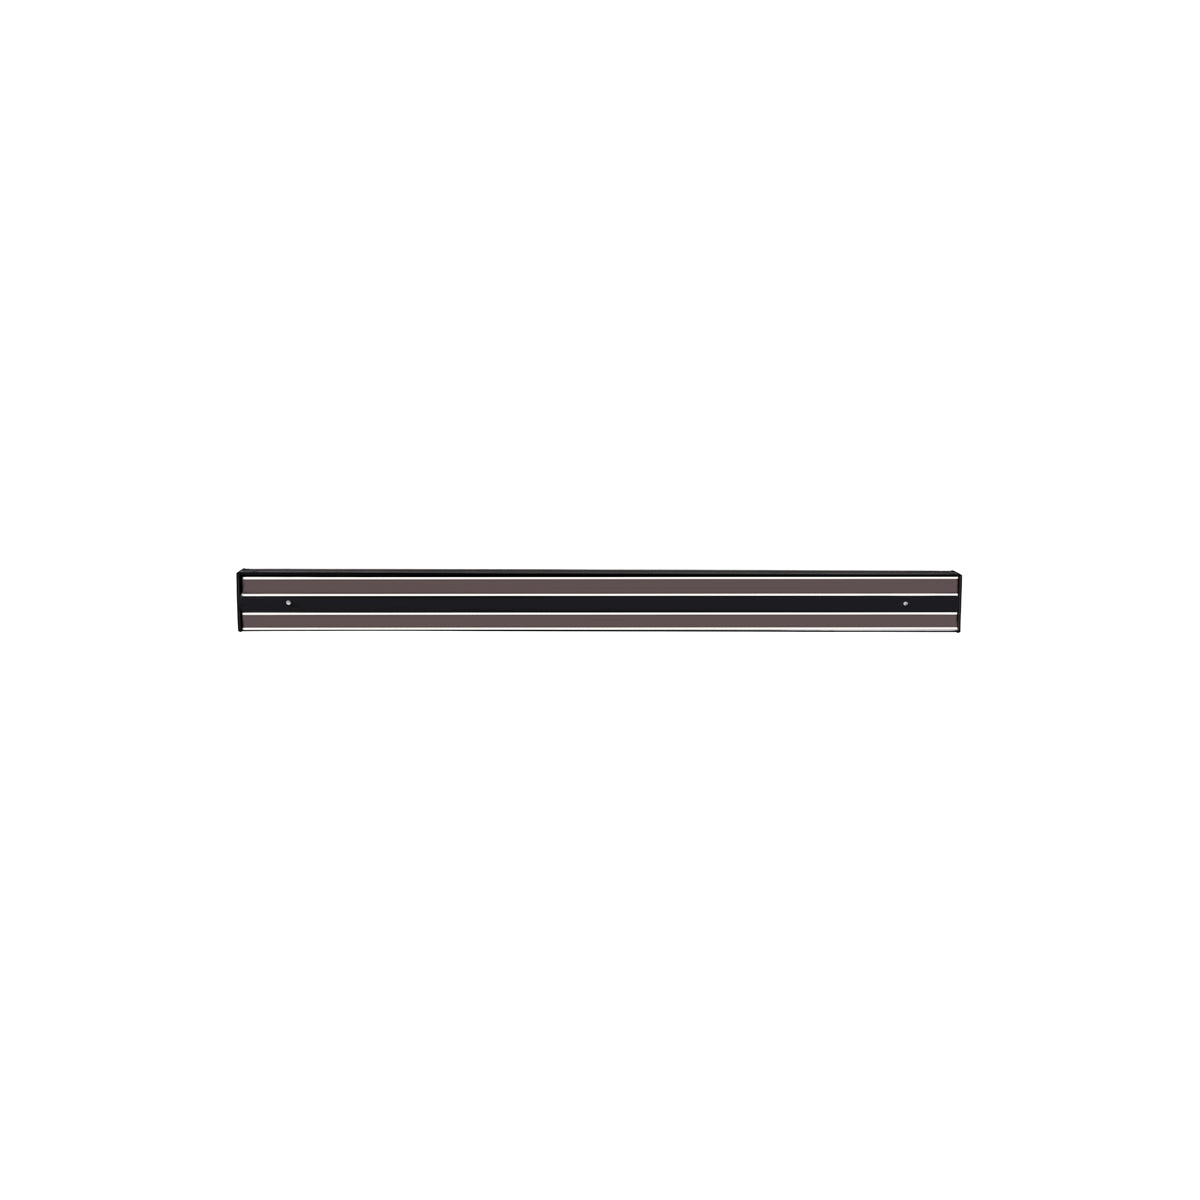 05173 Chef Inox Magnetic Knife Rack Black 450mm Tomkin Australia Hospitality Supplies